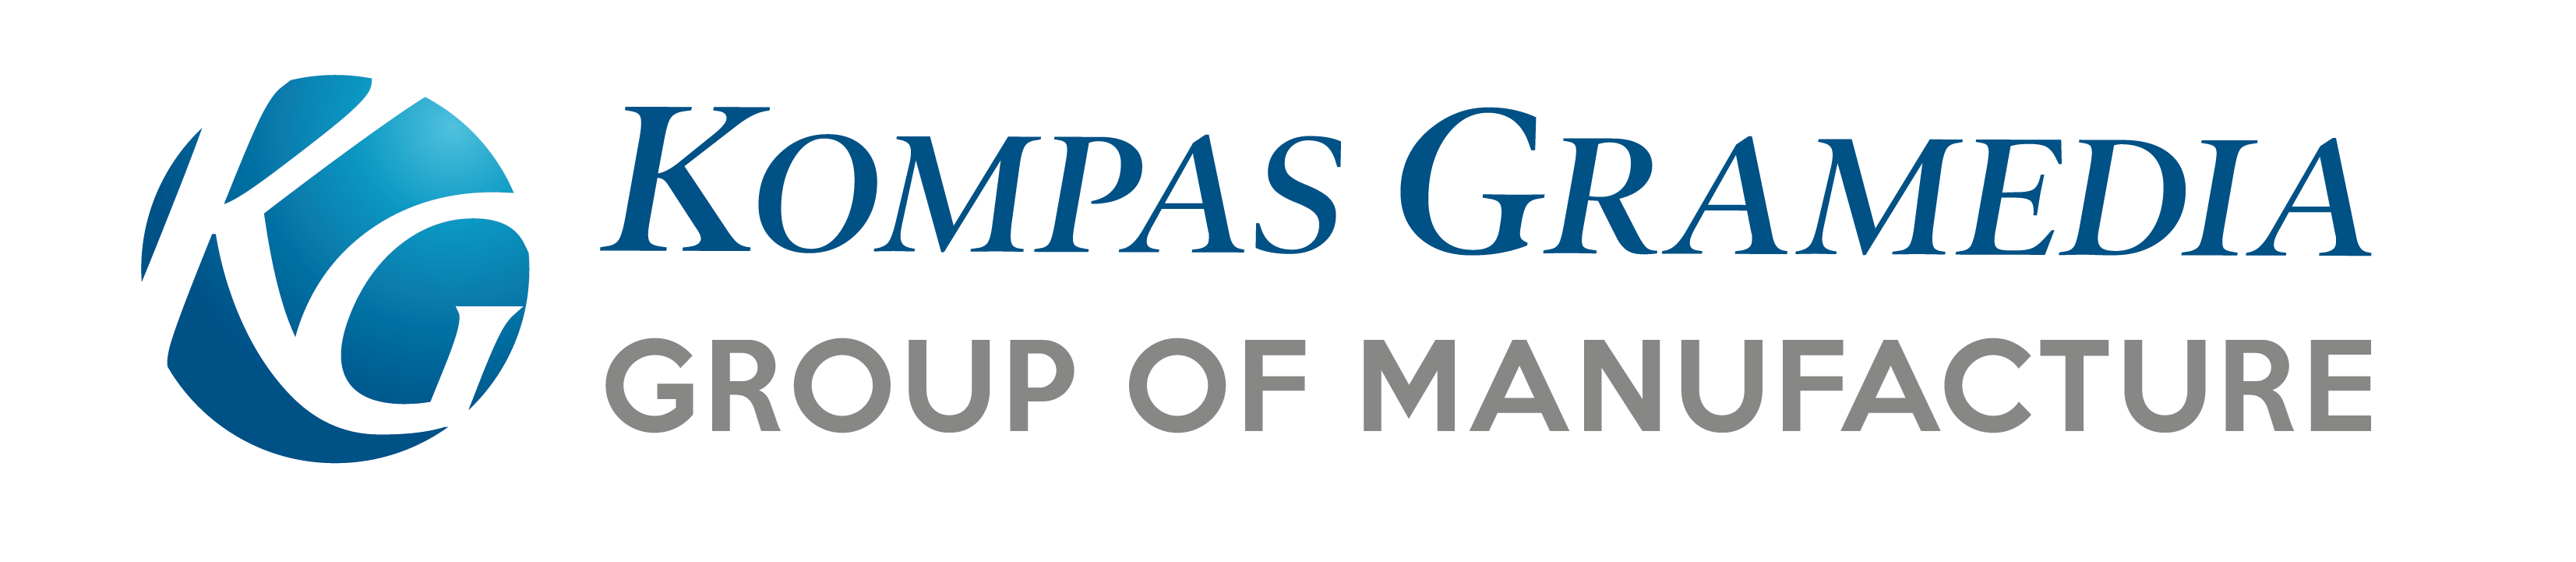 Kompas-Gramedia-Manufacture